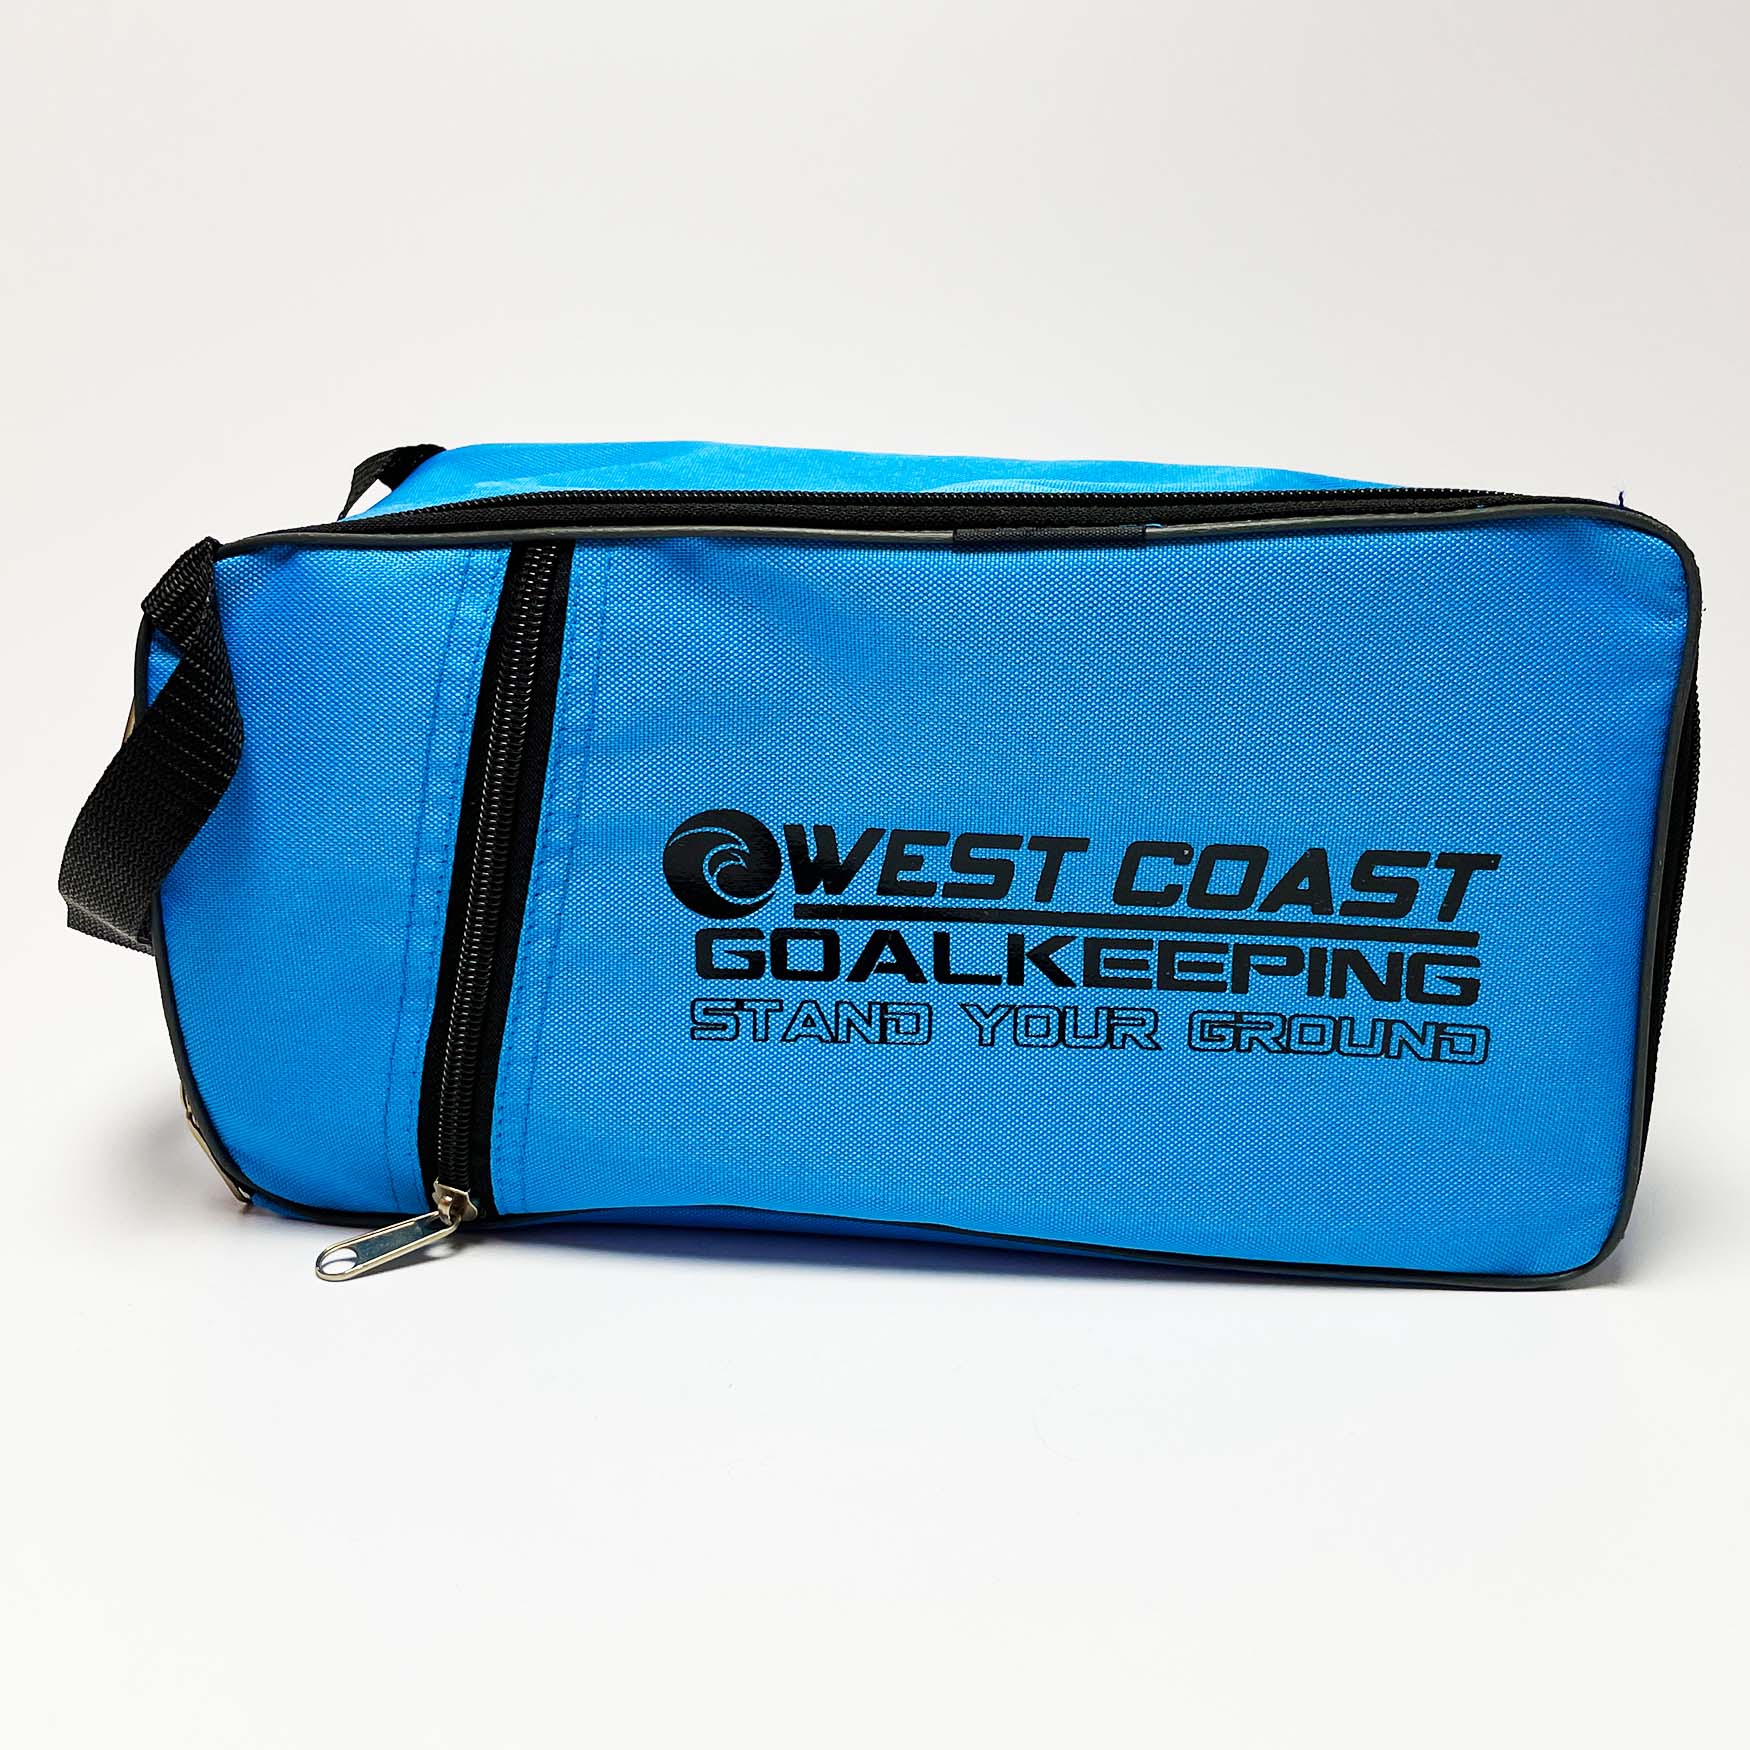 Guardian Bag - West Coast Goalkeeping